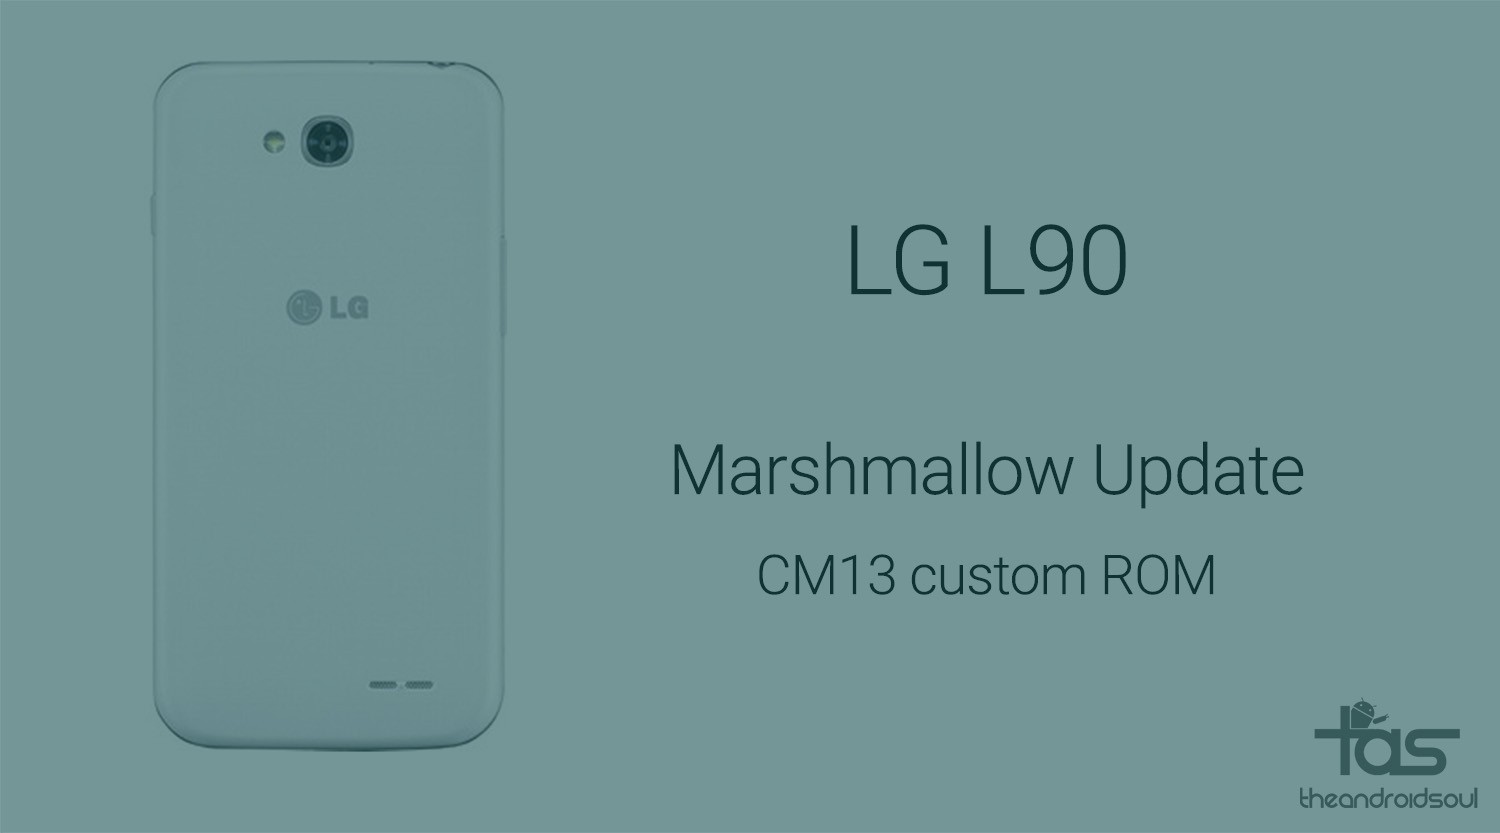 Obtenga la actualización de LG L90 Marshmallow a través de CM13 ROM